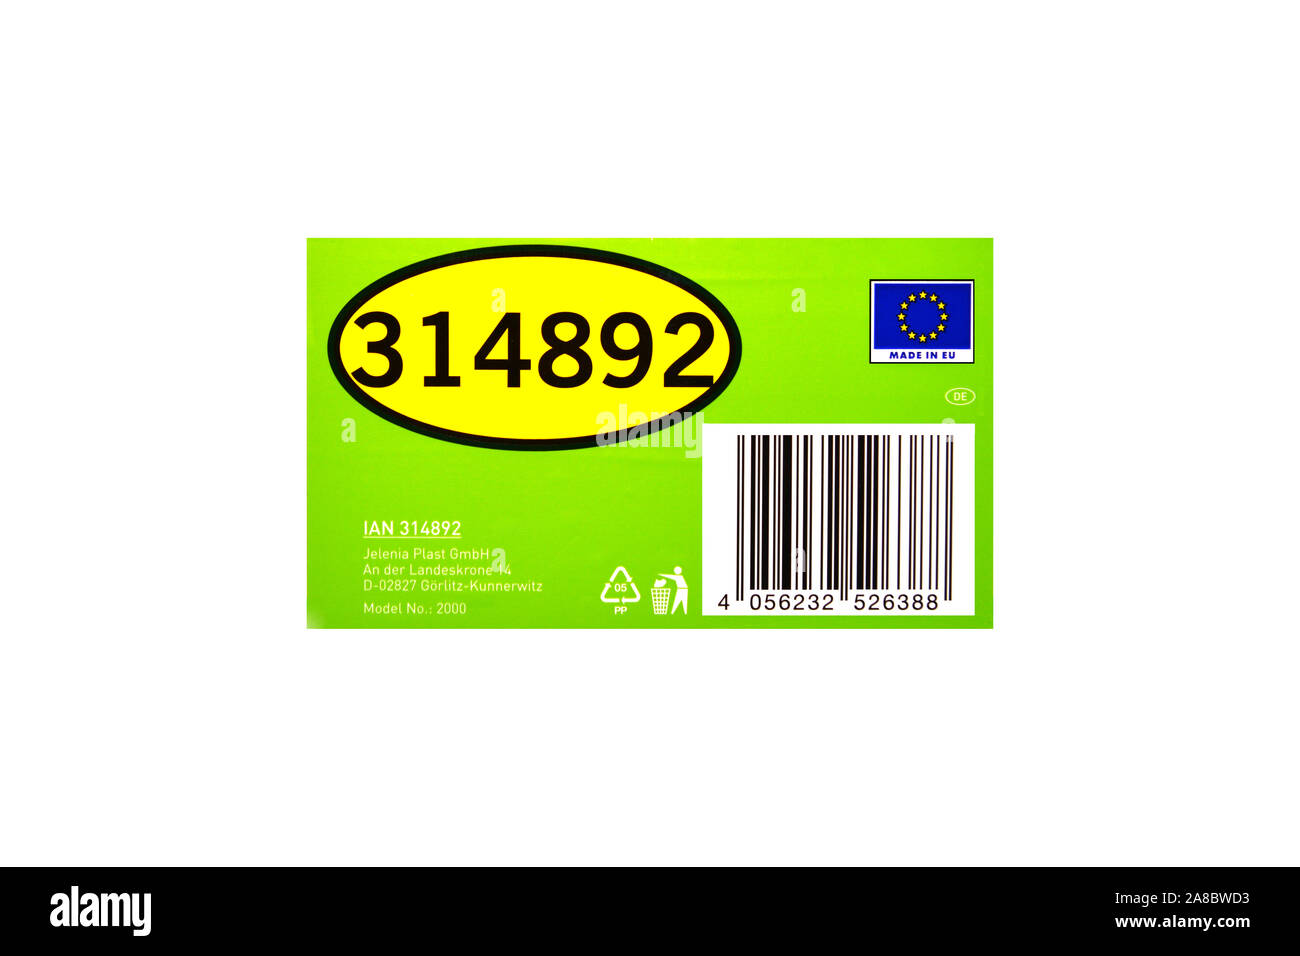 IAN; Europaeische Artikel Nimmer, European Articel Number, Strichcode, Barcode, EU-Norm, Stock Photo